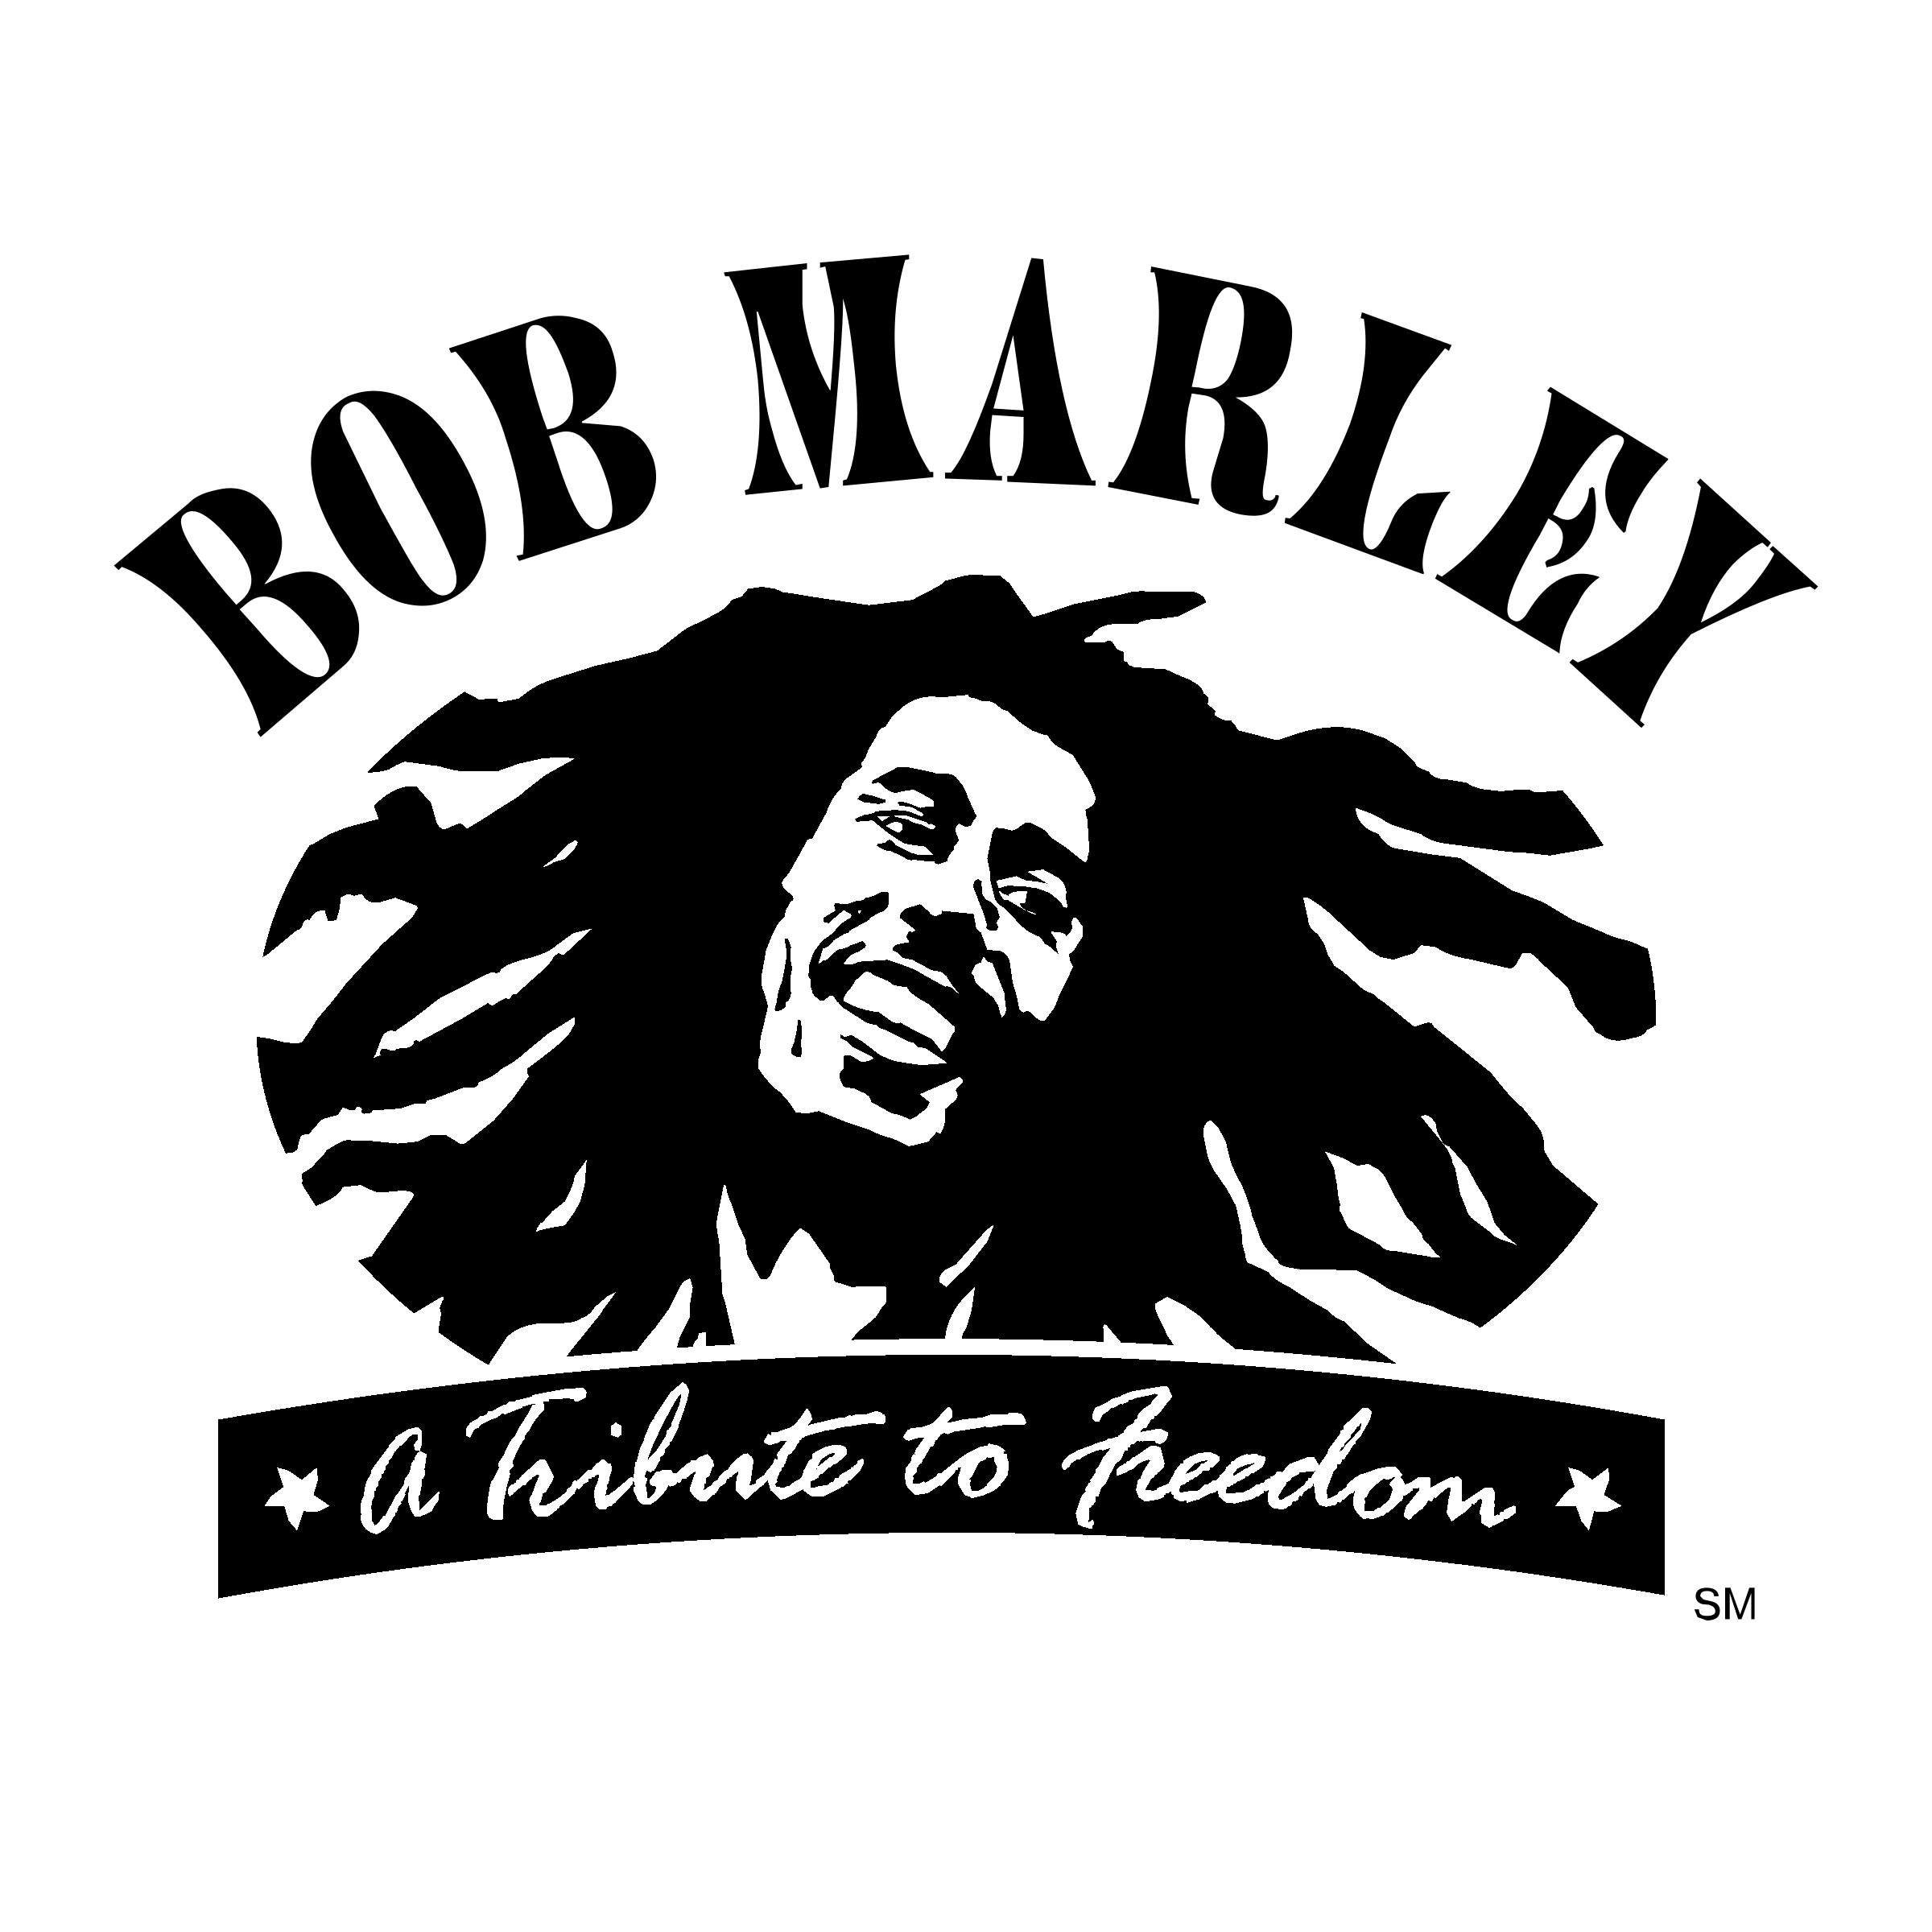 Bob Marley Black and White Logo - Bob Marley 01 Logo PNG Transparent & SVG Vector - Freebie Supply